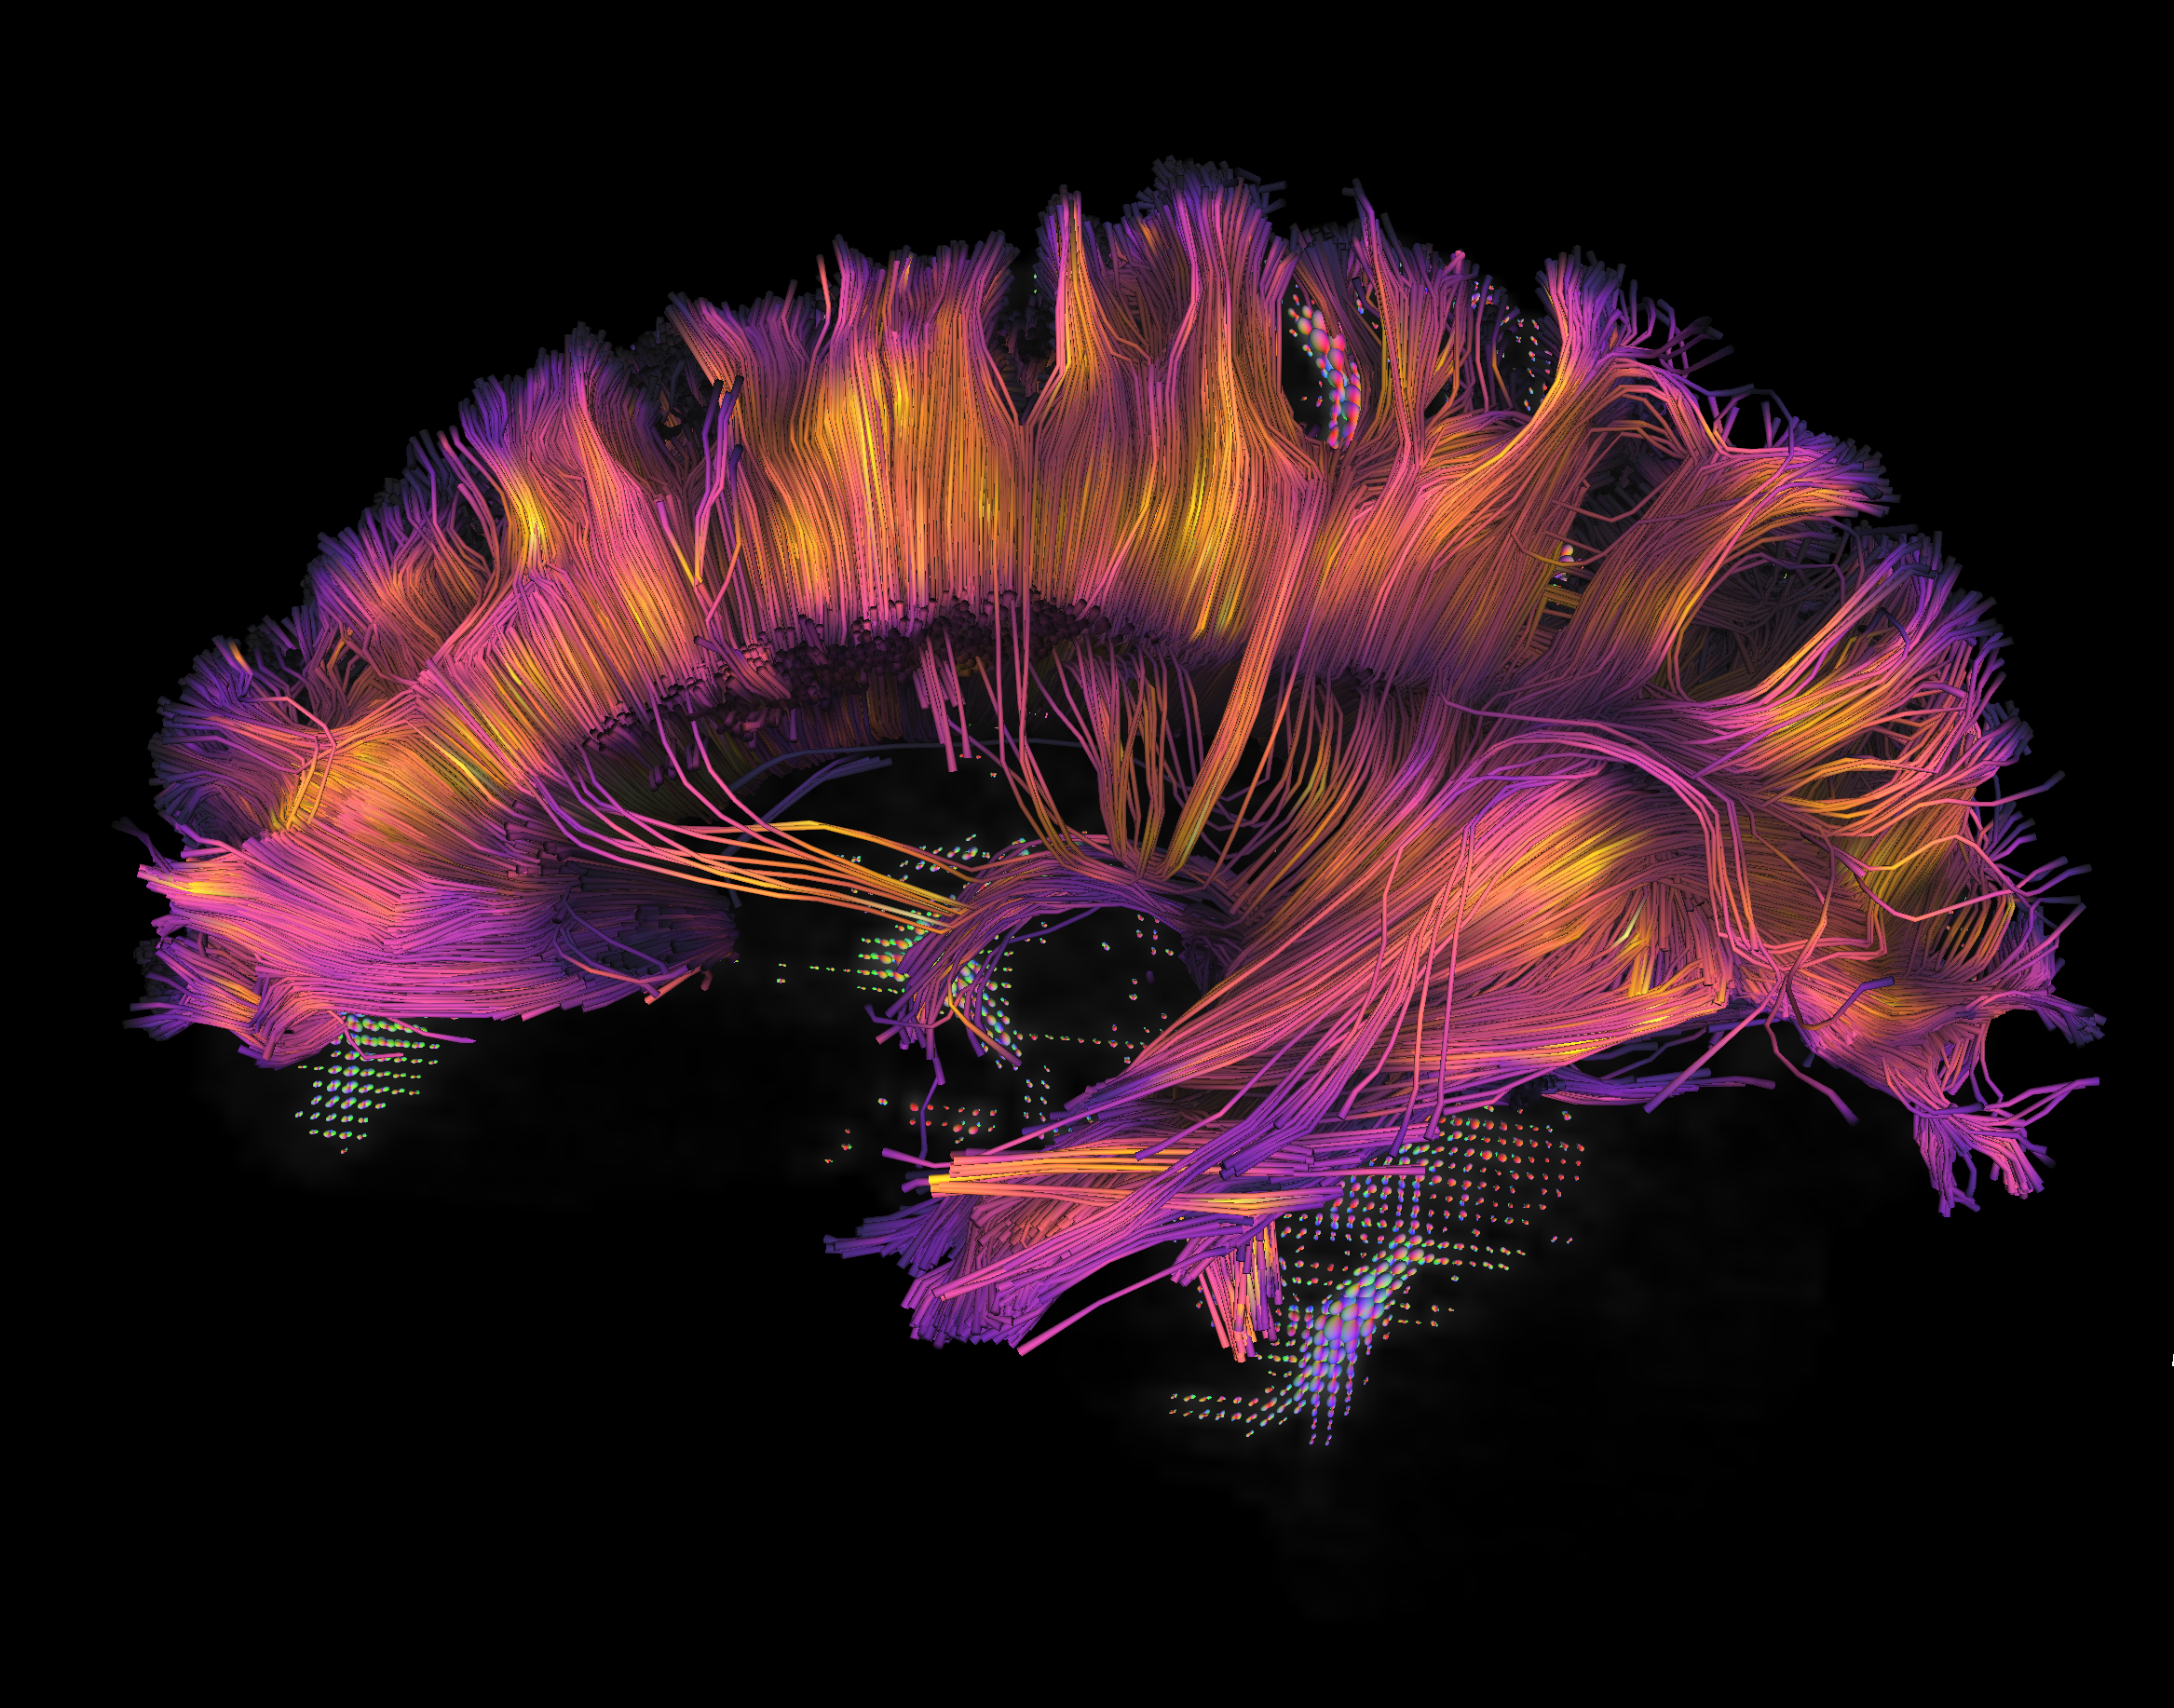 Diffusion imaging brain scan